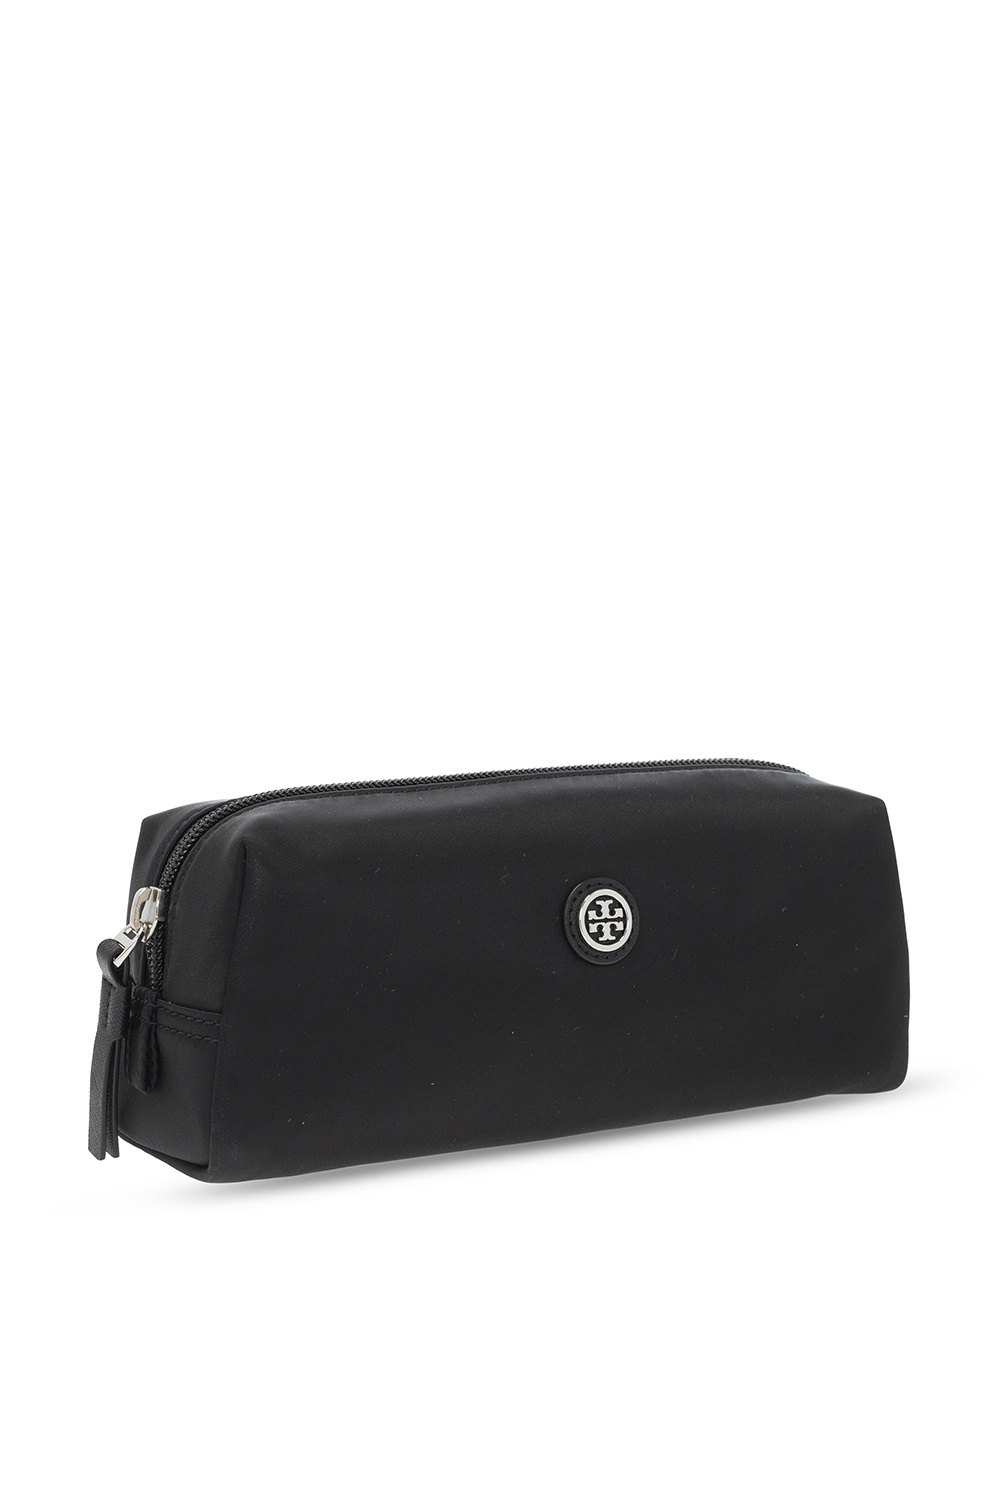 IetpShops Croatia - Black Wash bag Pochette with logo Tory Burch